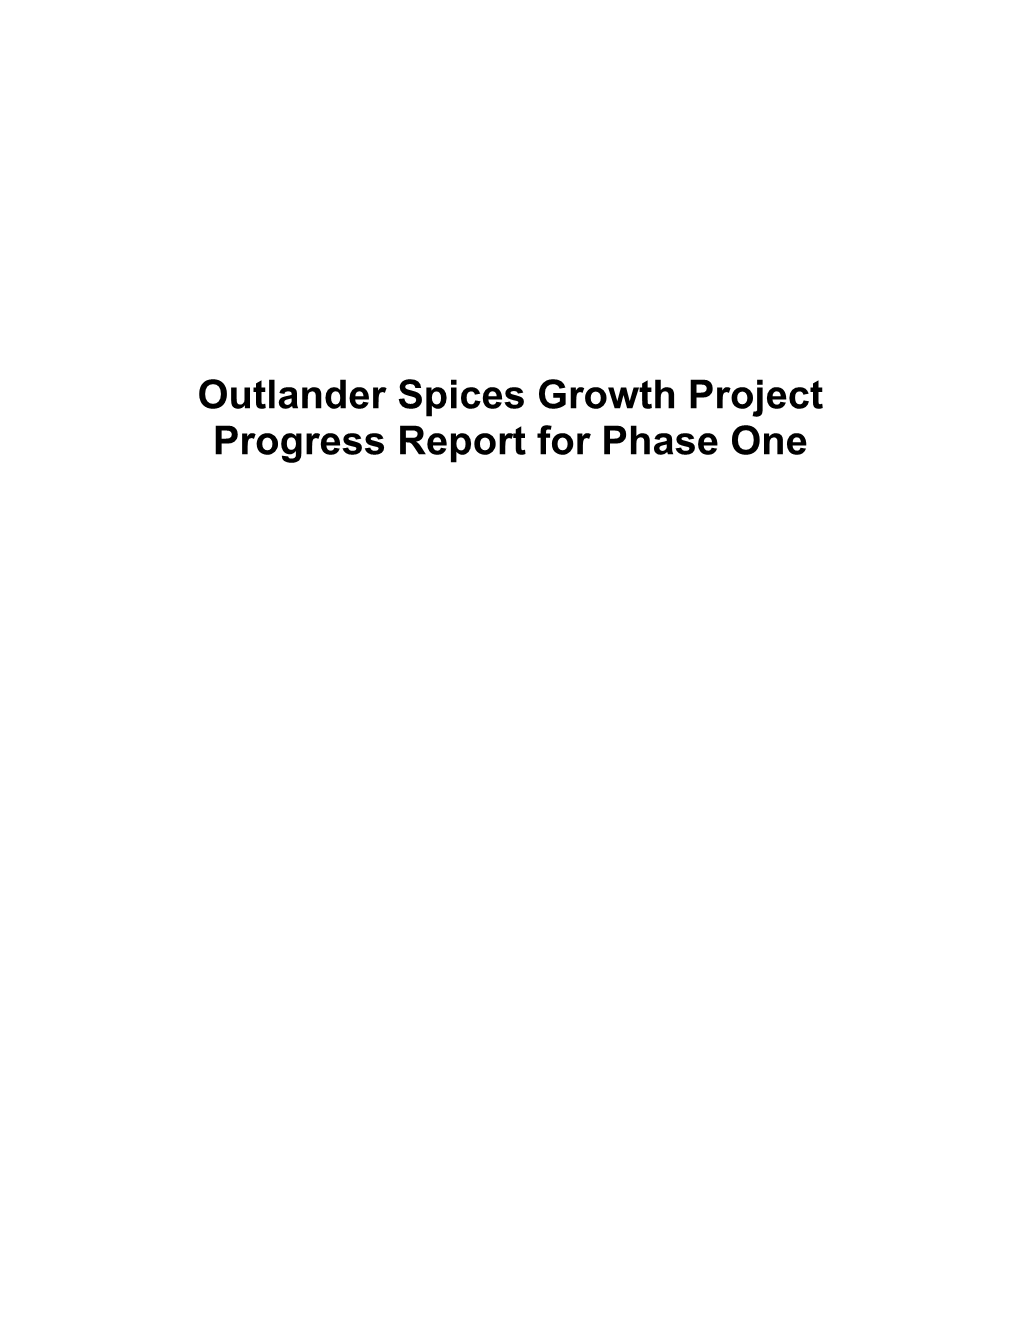 Outlander Spices Expansion Progress Report